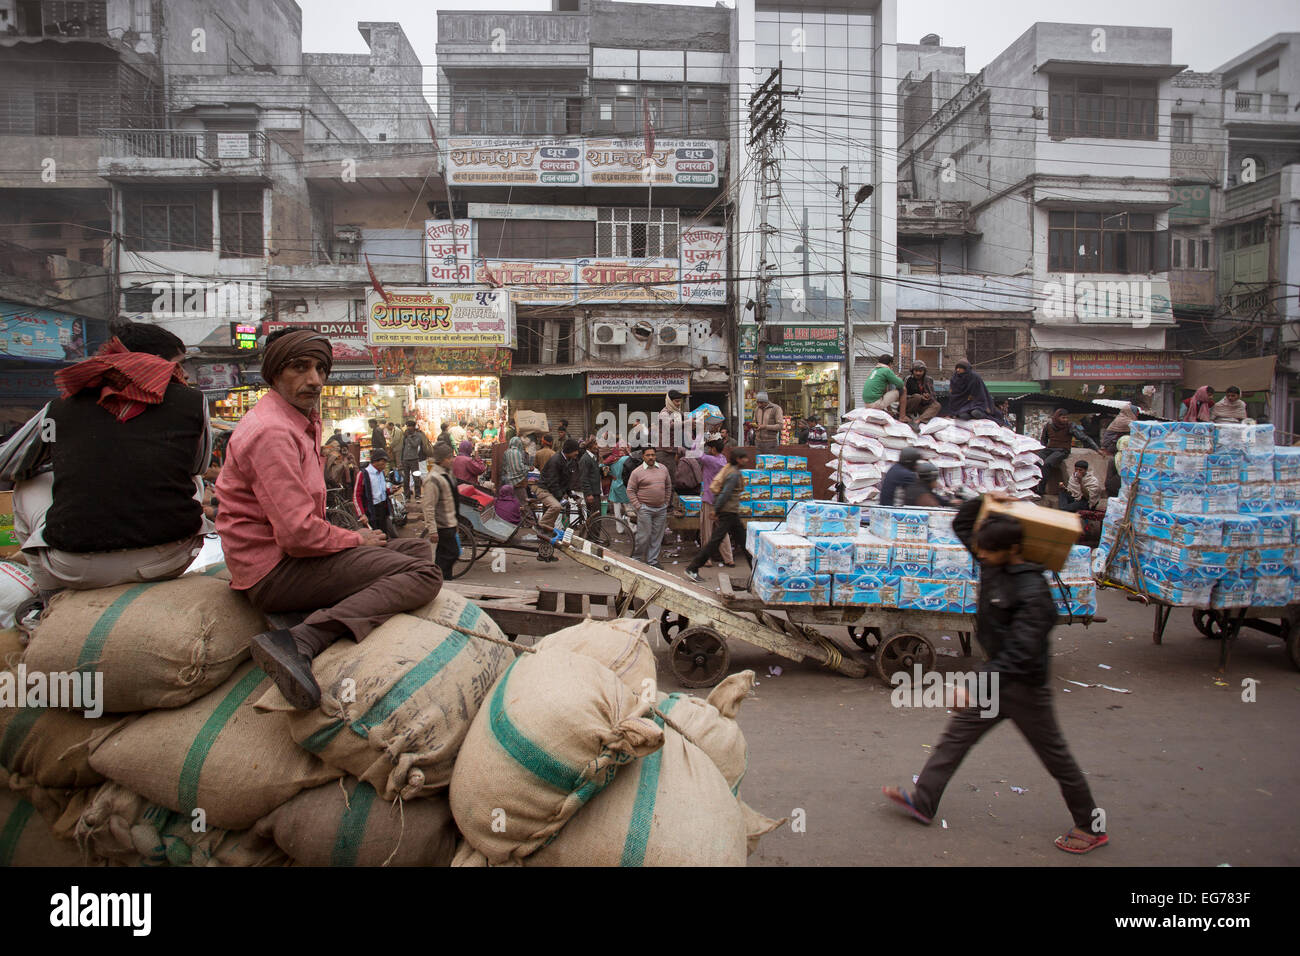 Crowded Street in Old Delhi, India (near spice market). Stock Photo